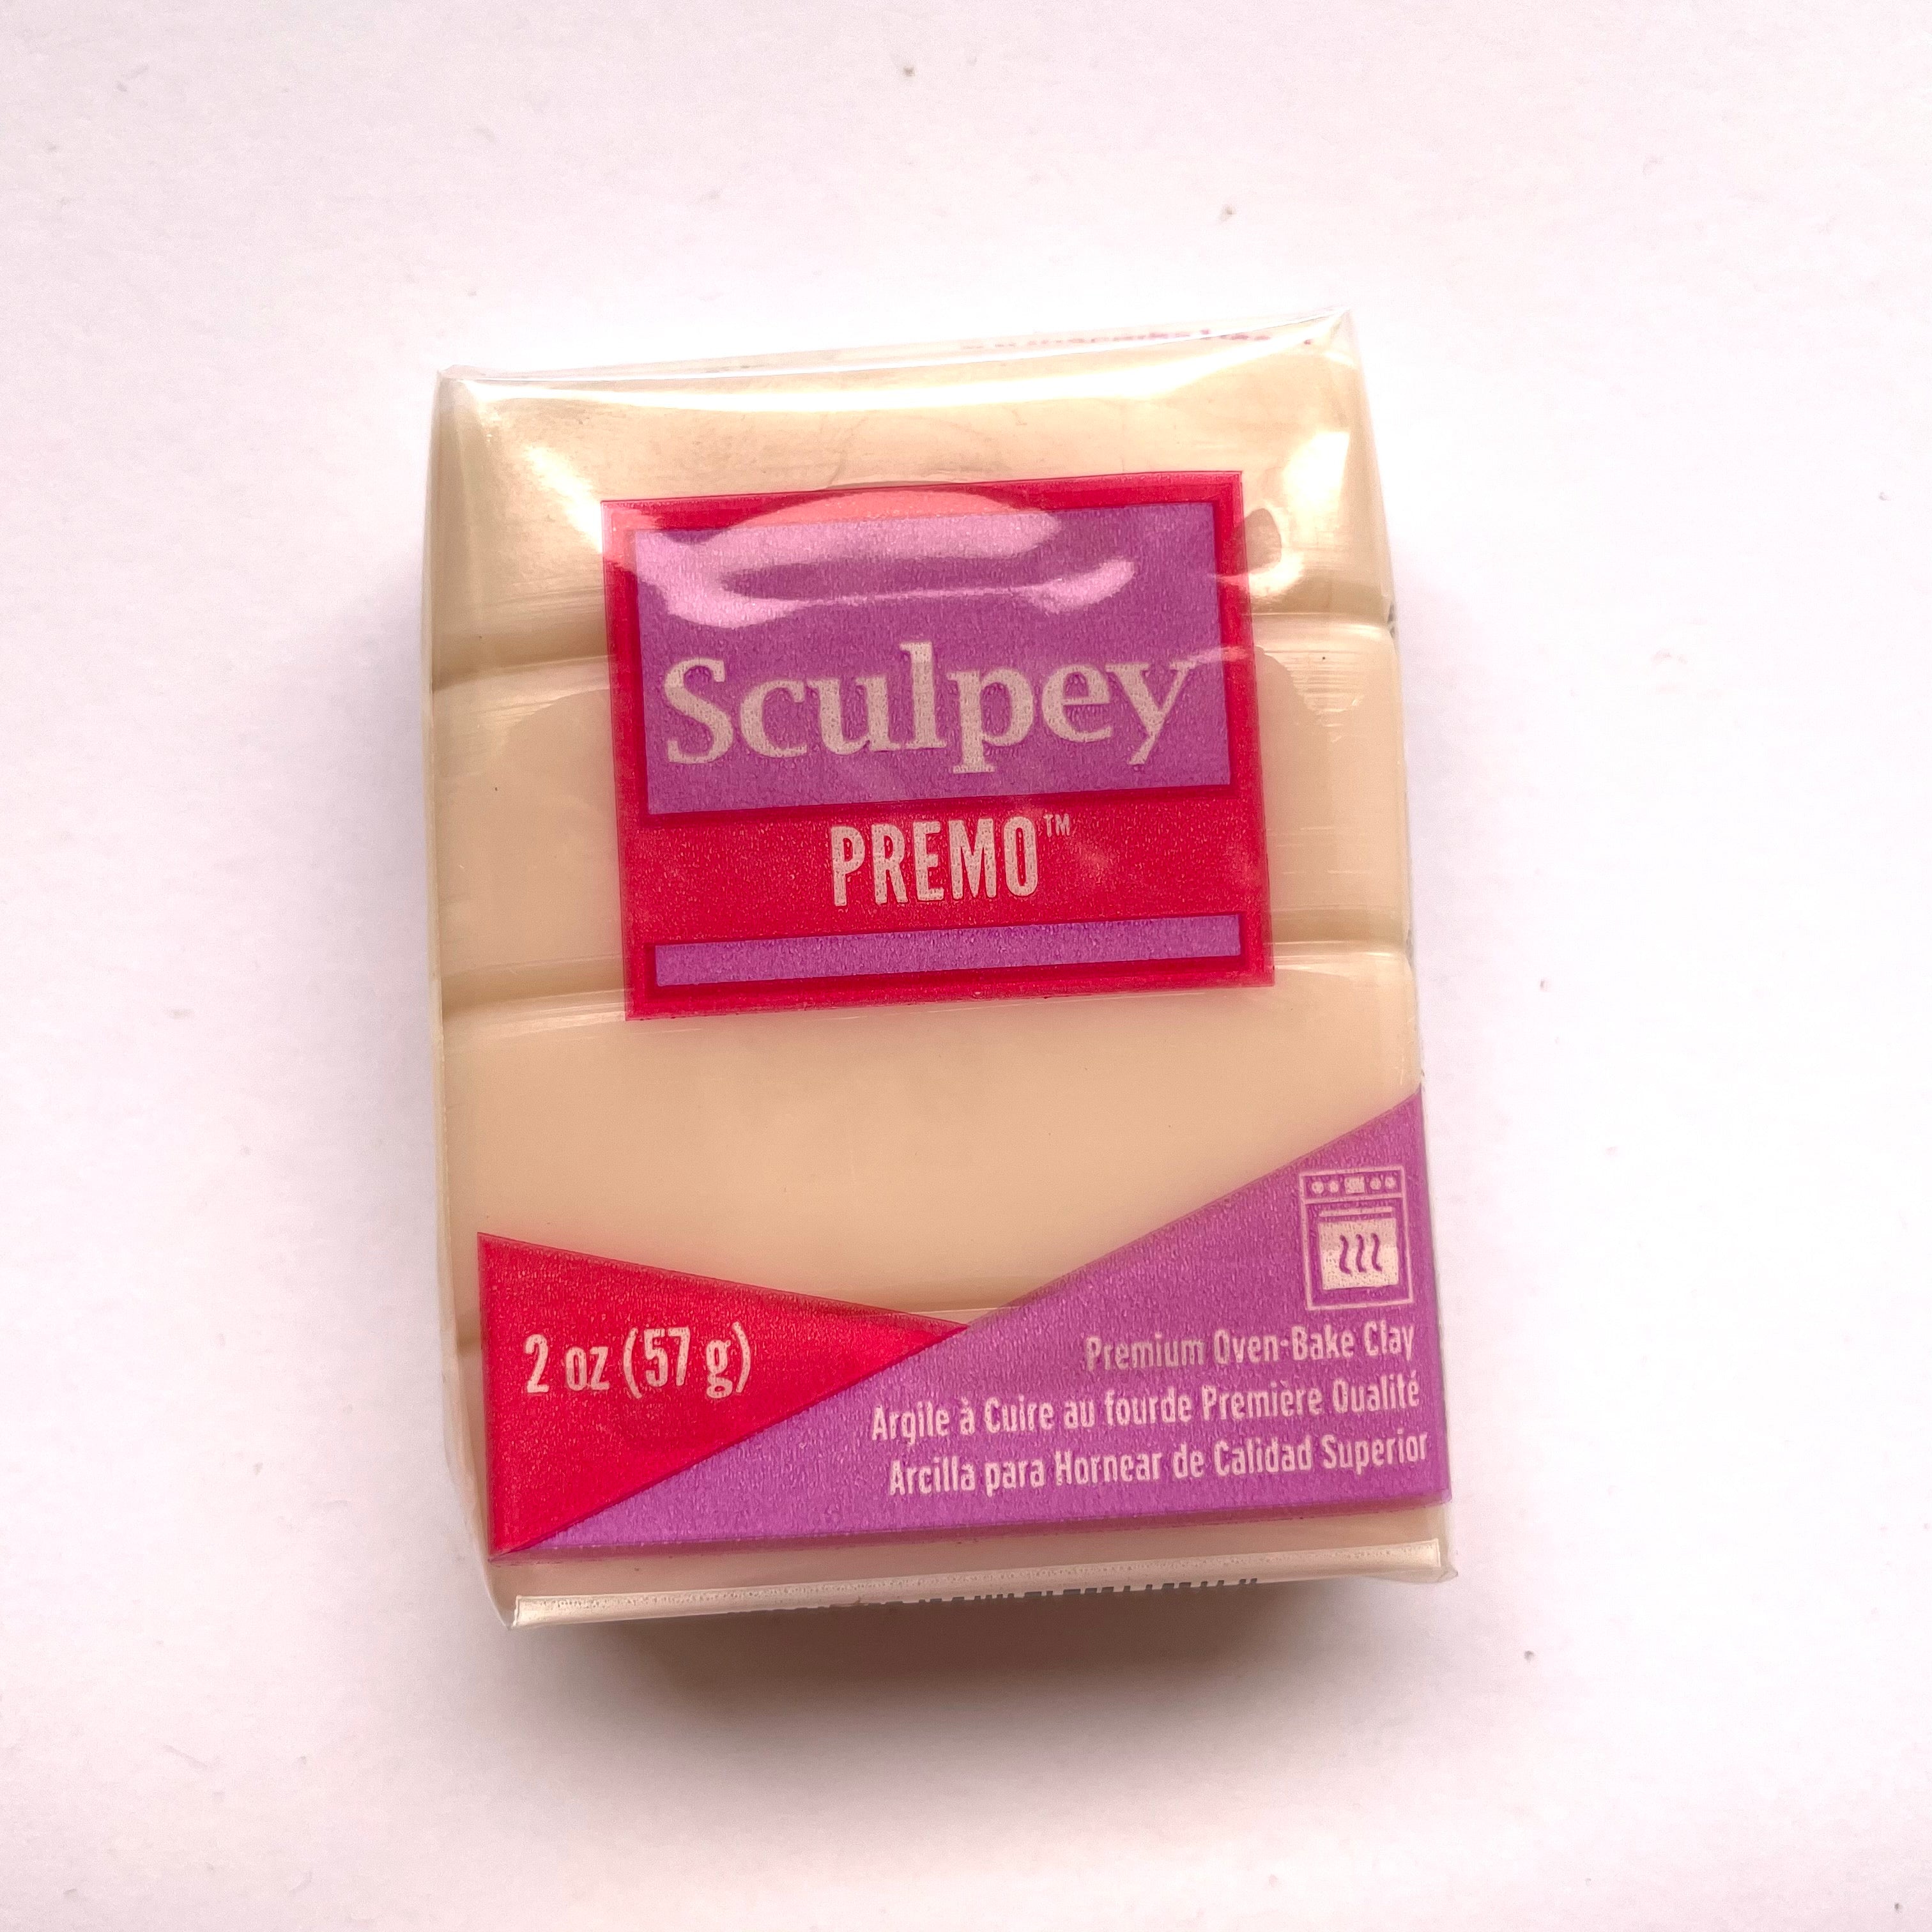 Sculpey Premo Polymer Clay - White Translucent 2 oz.